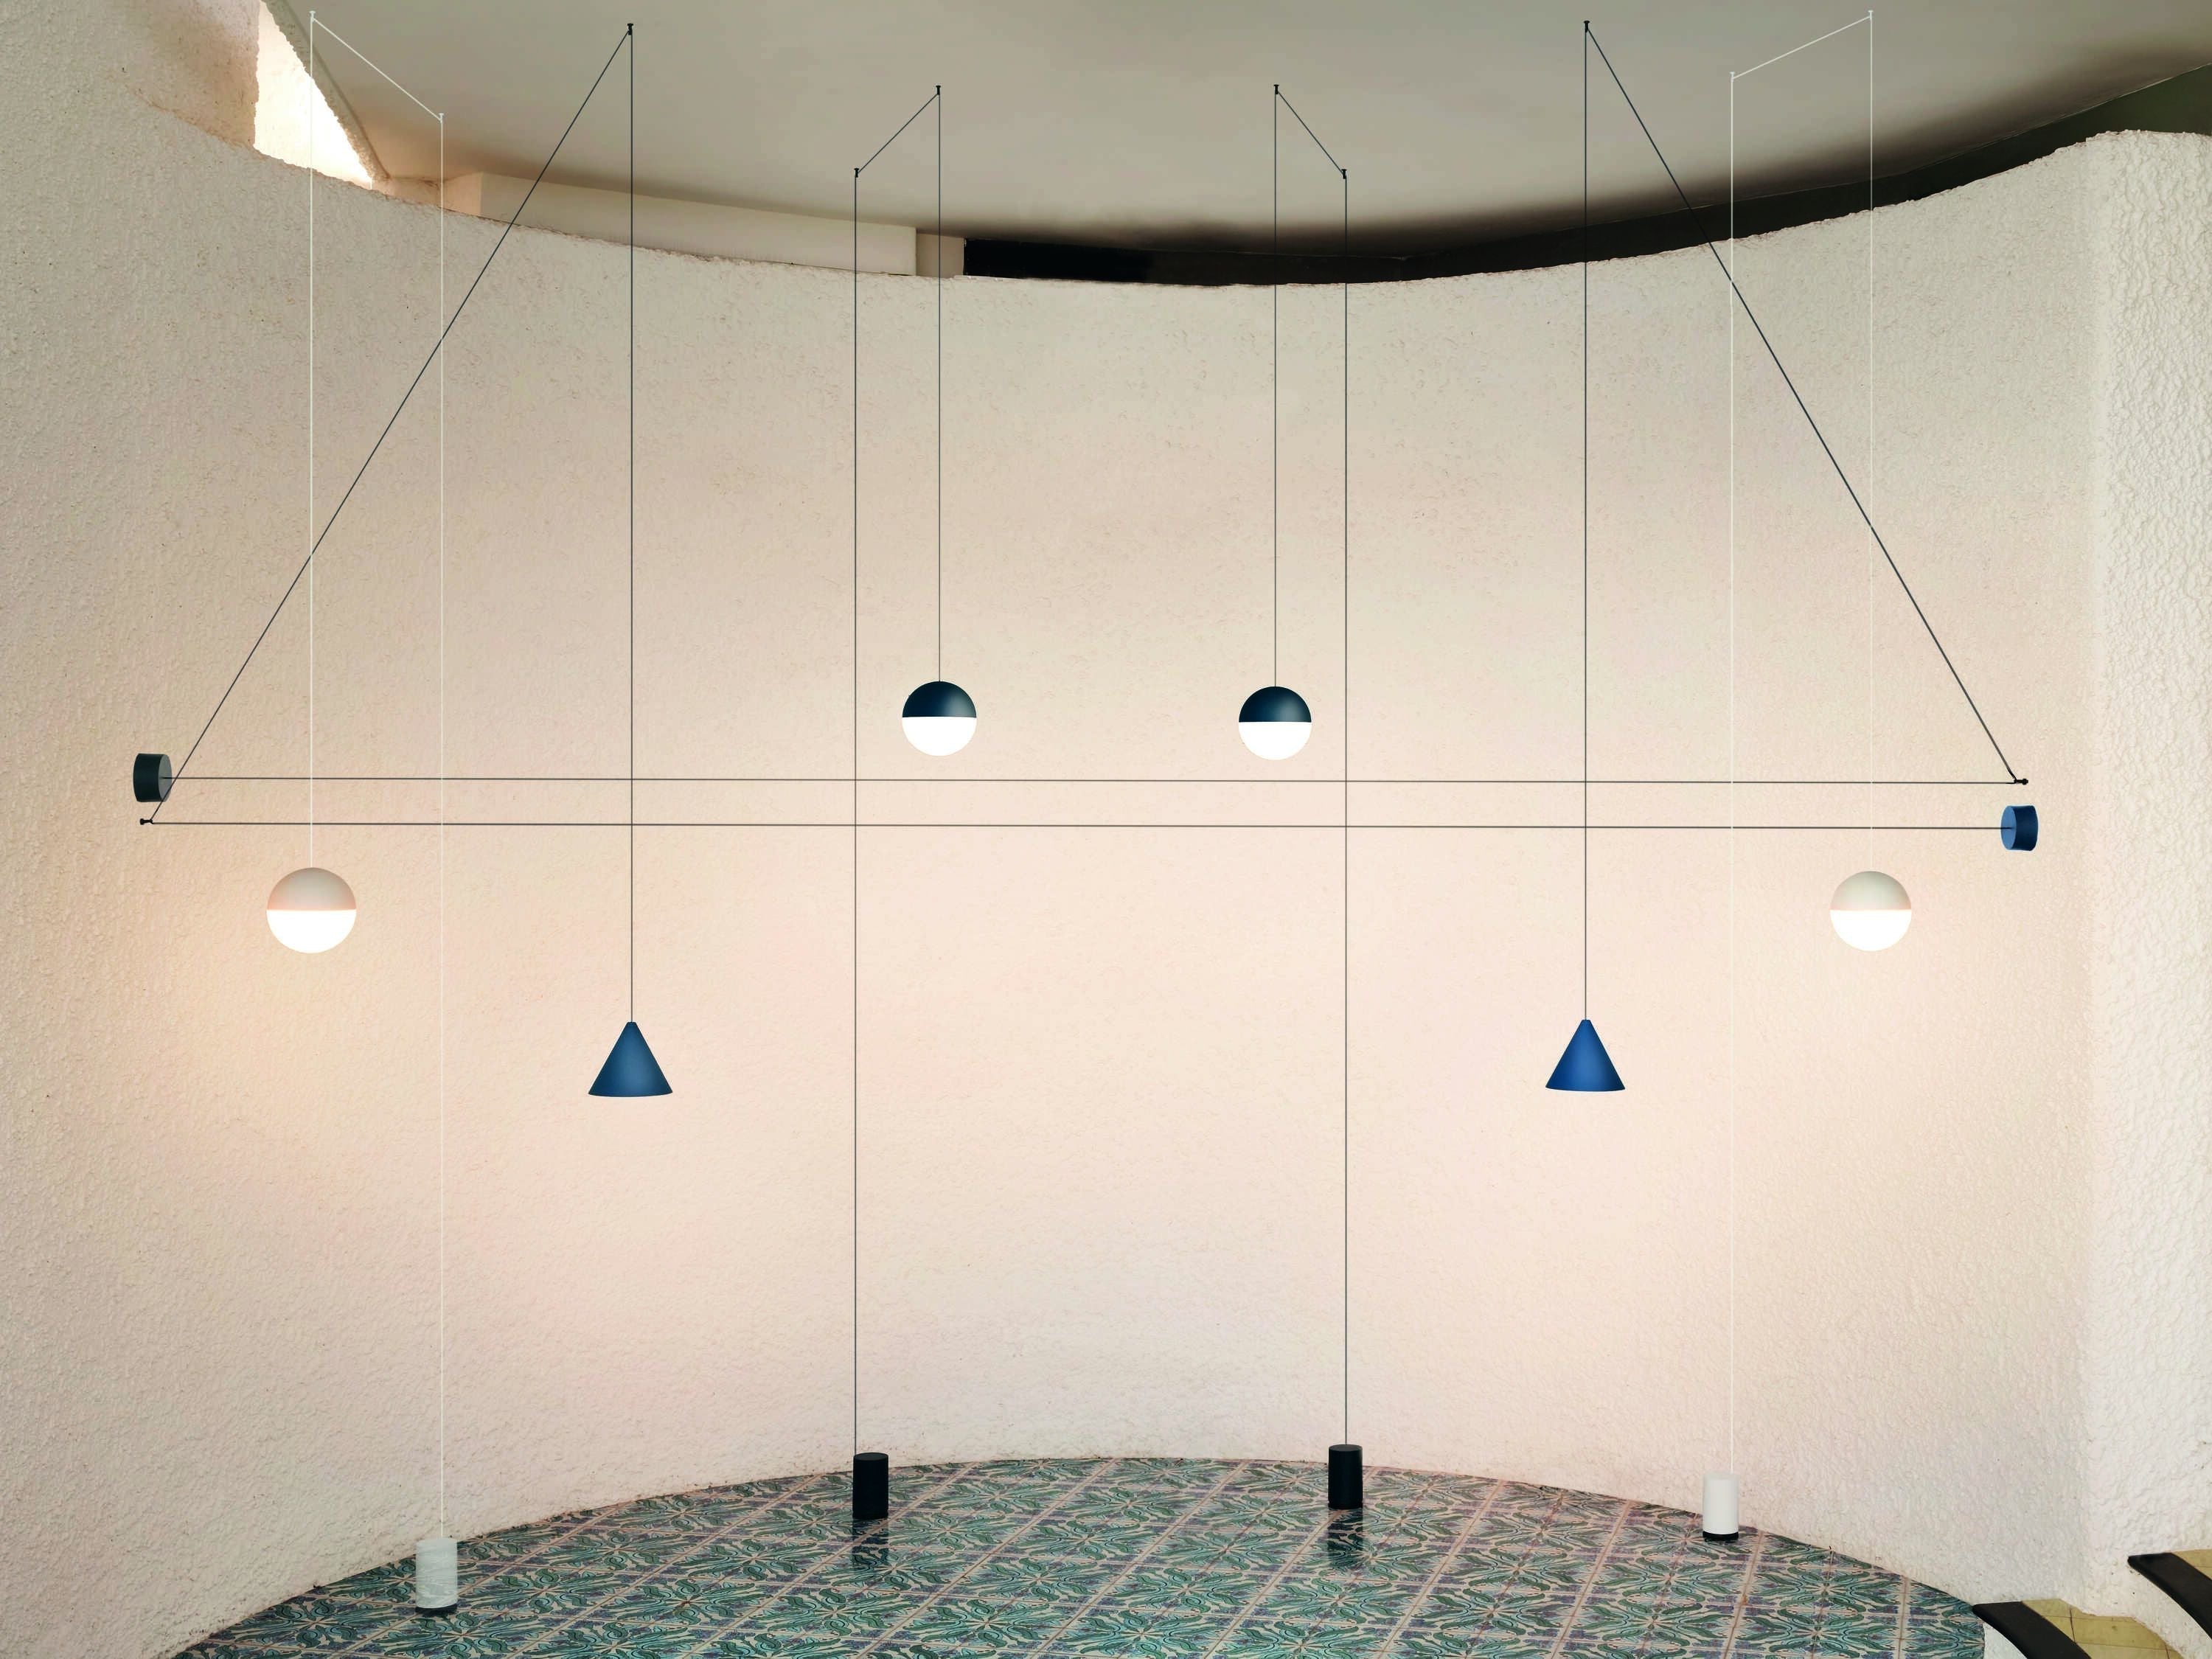 Flos Streng lys kegle hovedpendel lampe bluetooth 12 m, hvid